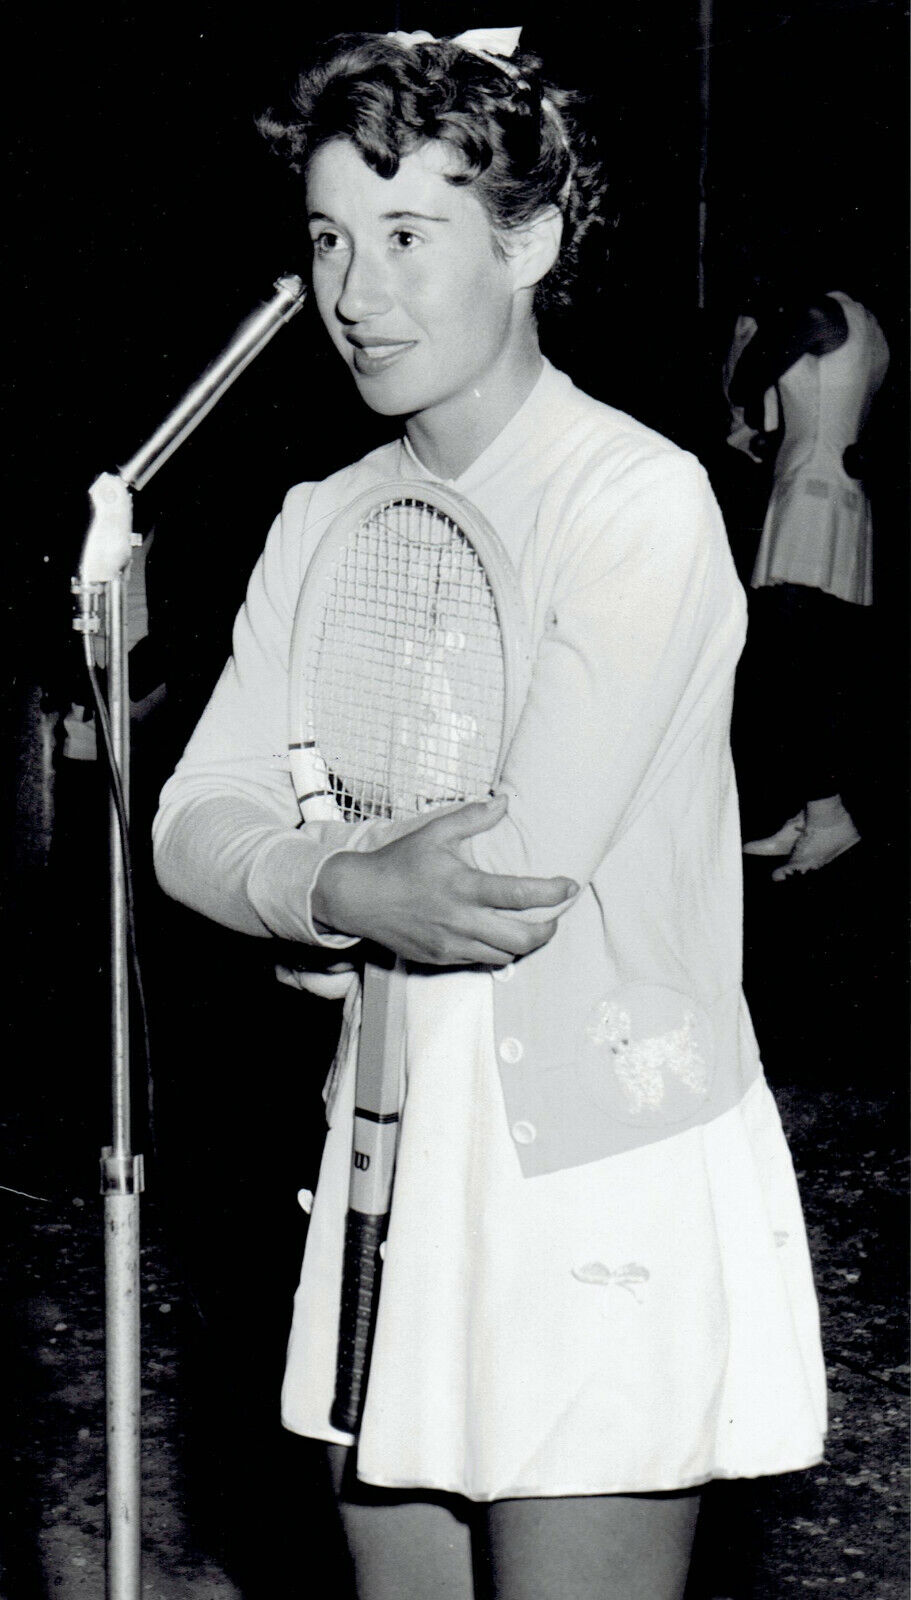 1956 Original Photo leggy tennis player Maureen Connolly poses for portrait